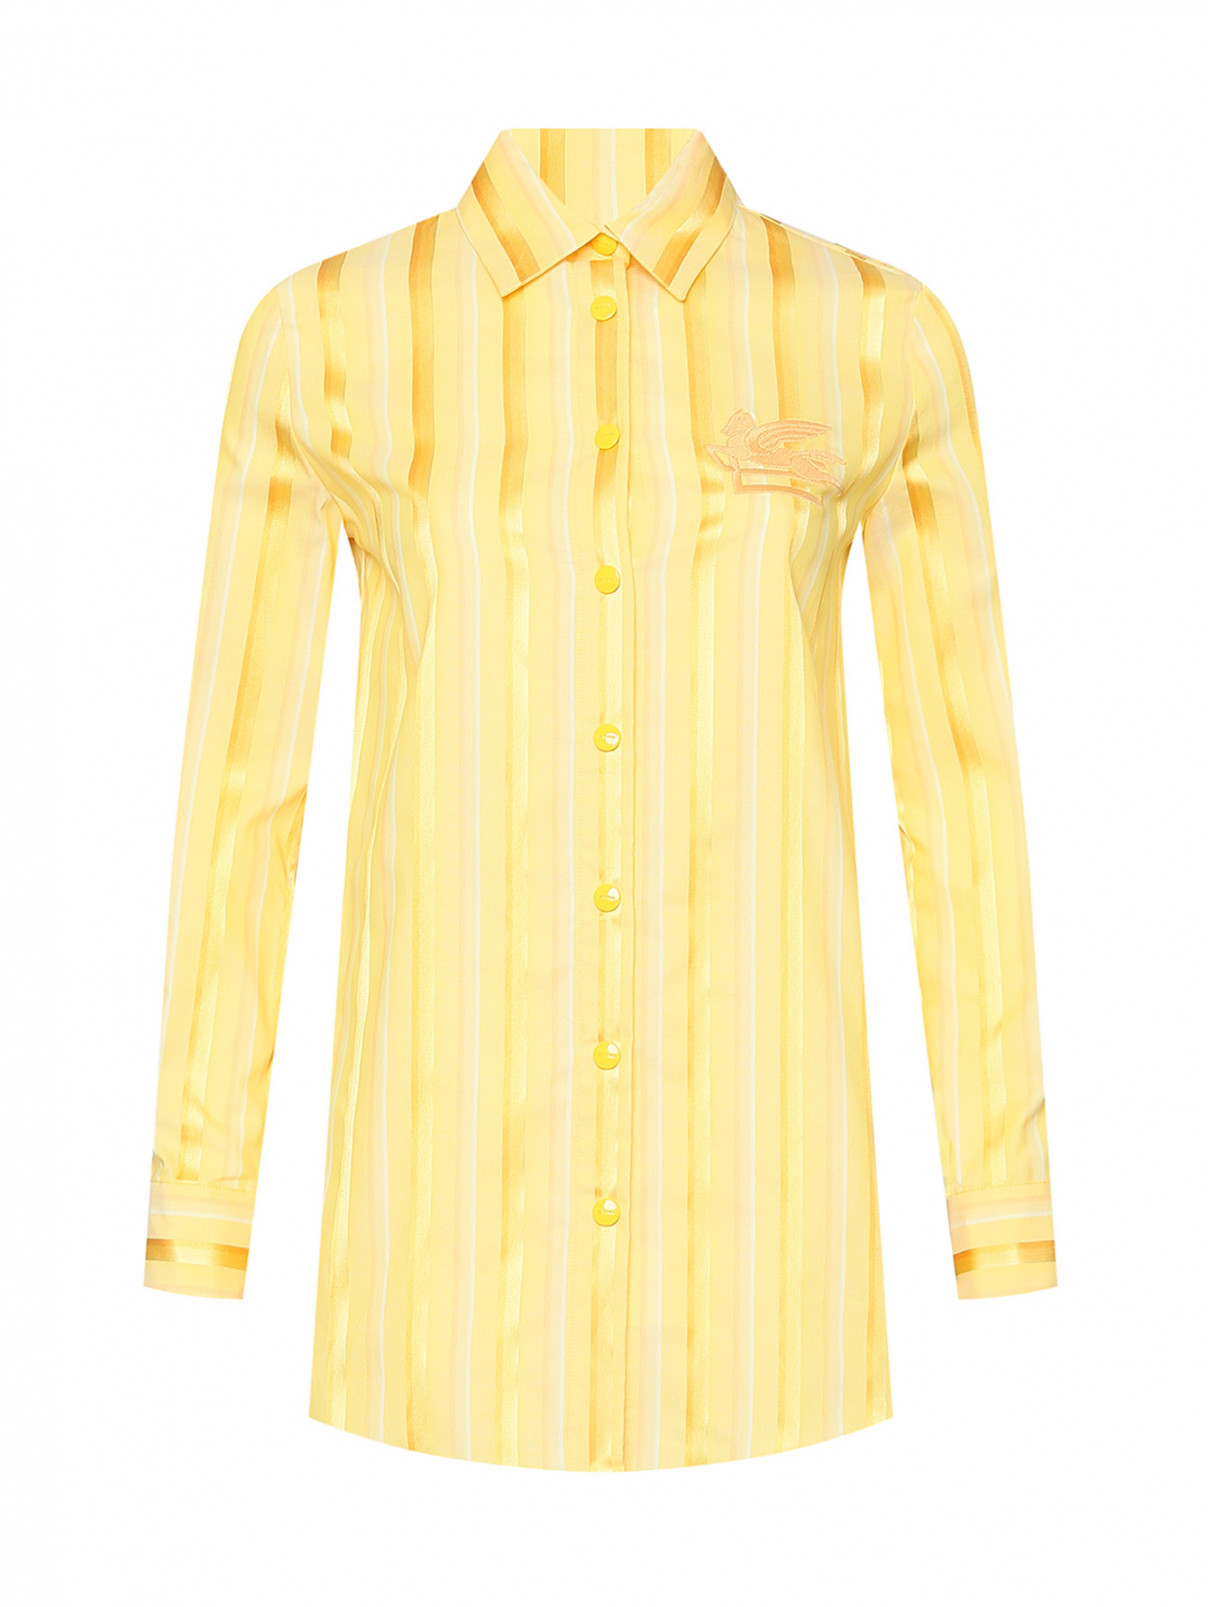 Рубашка Etro  –  Общий вид  – Цвет:  Желтый